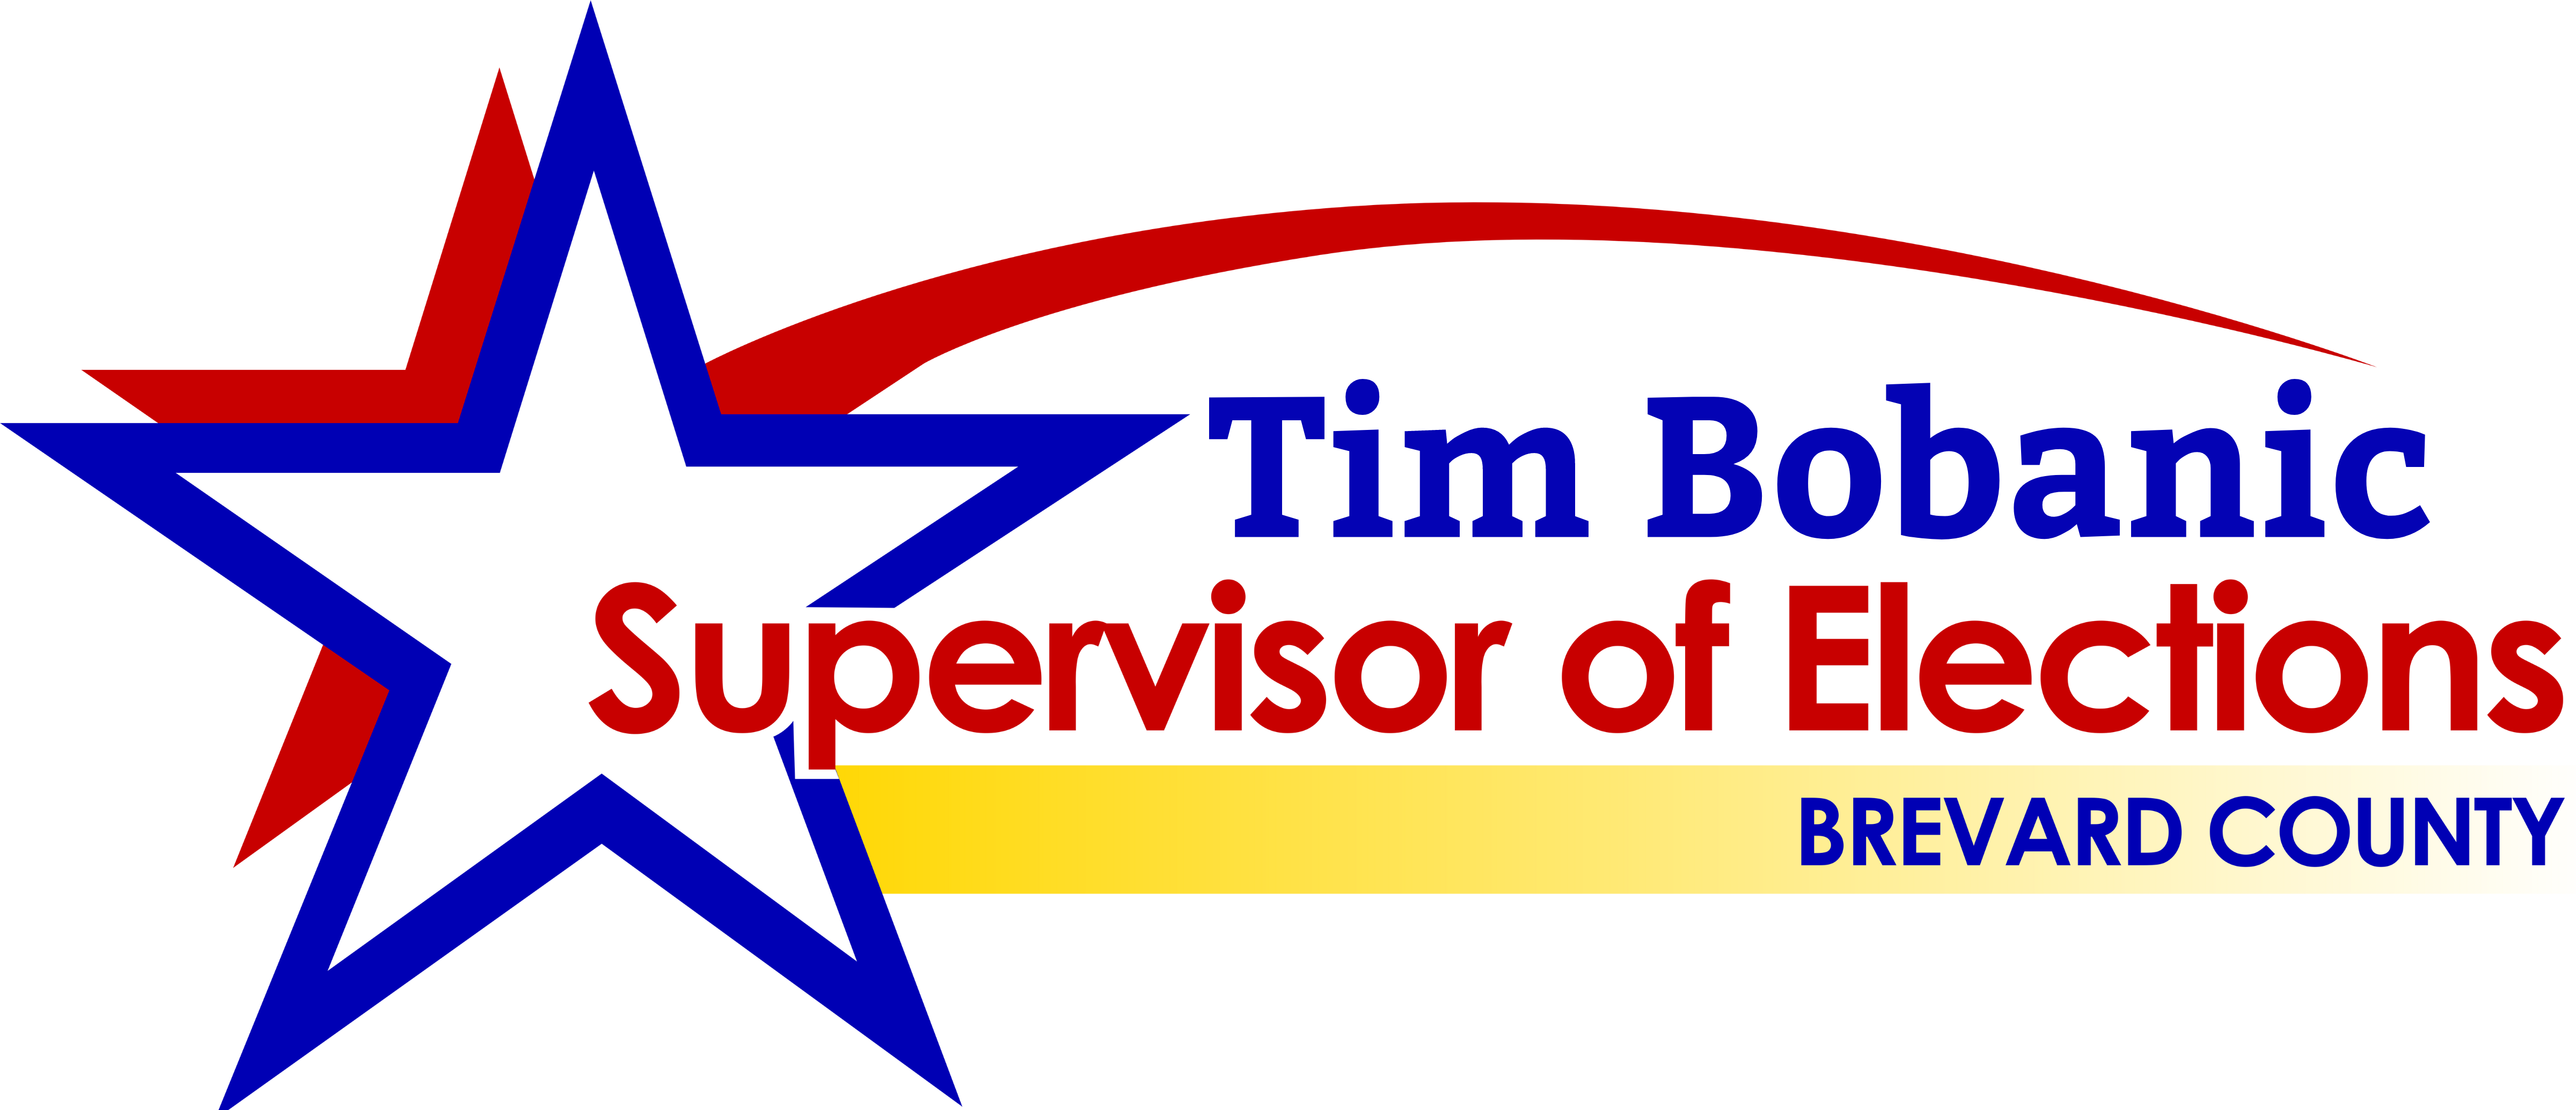 Tim Bobanic Supervisor of Elections